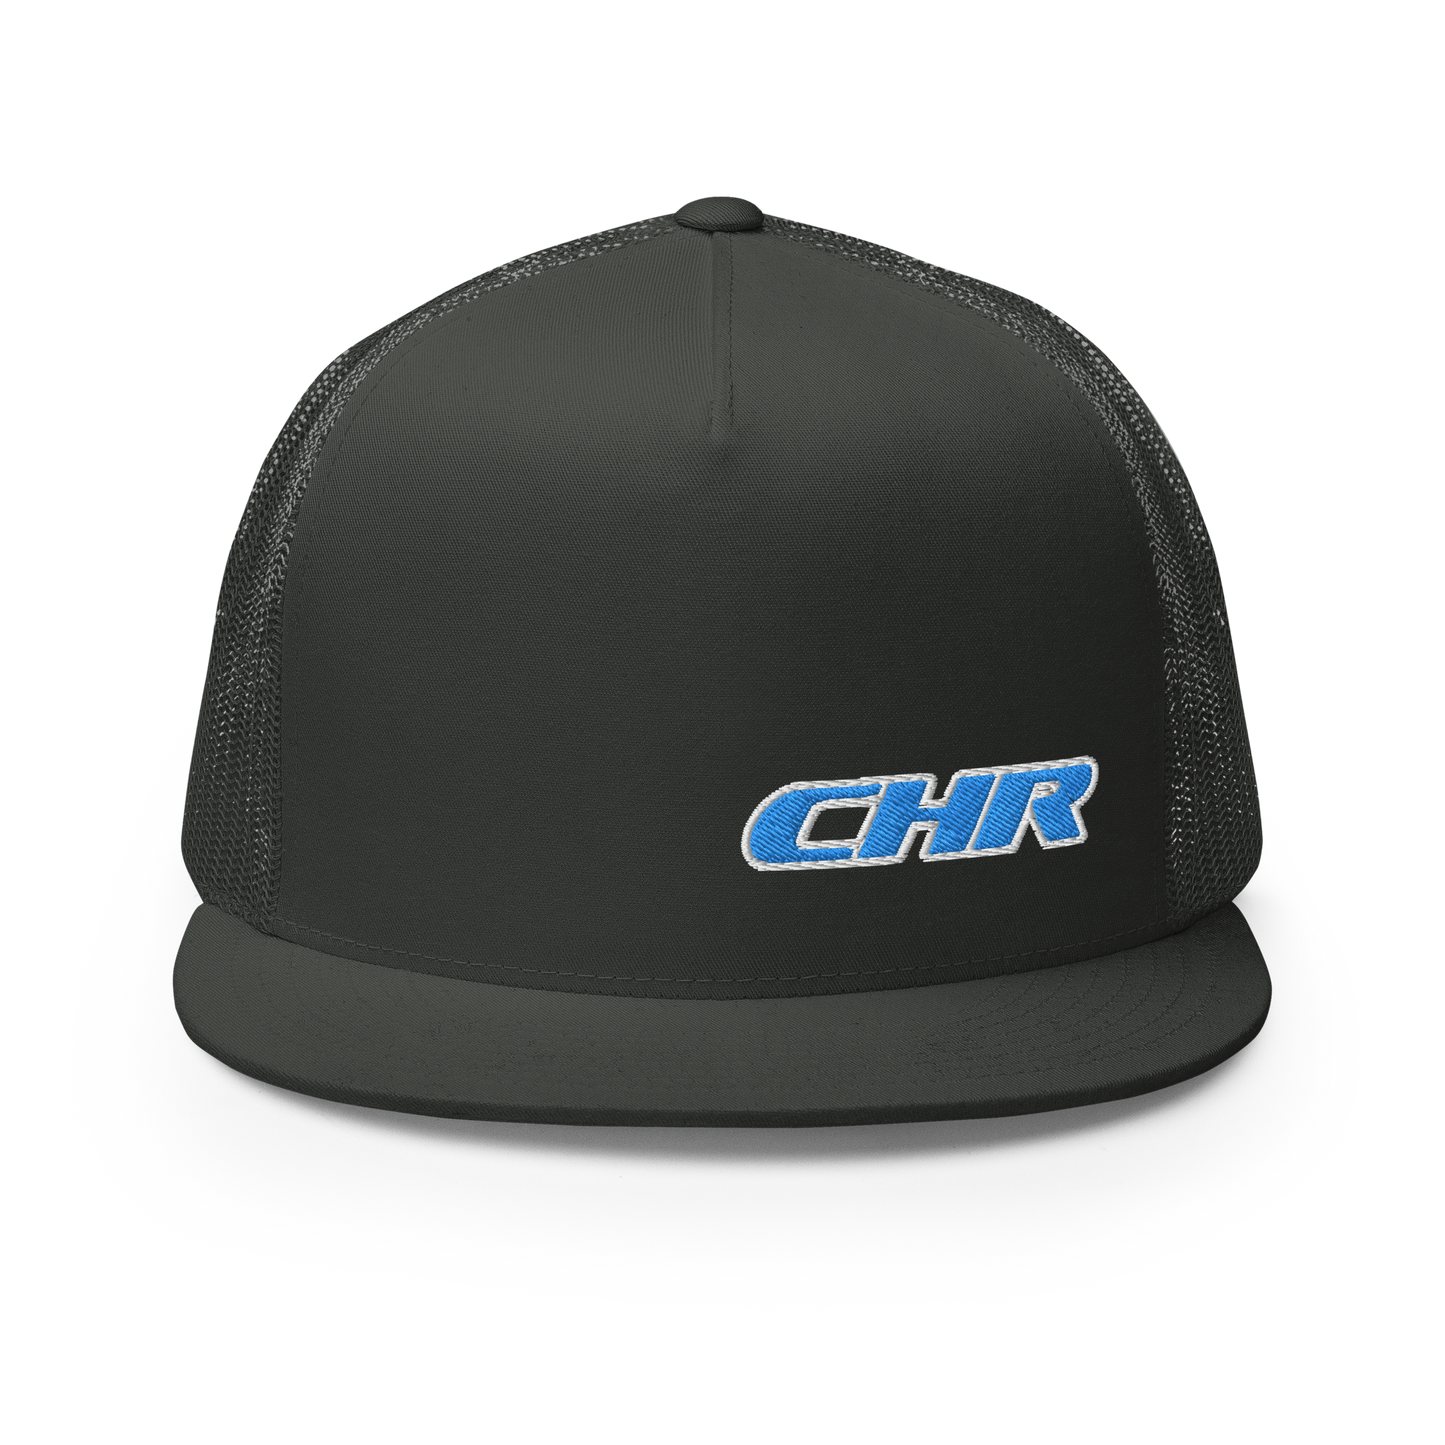 CHR Flat Bill Trucker Cap